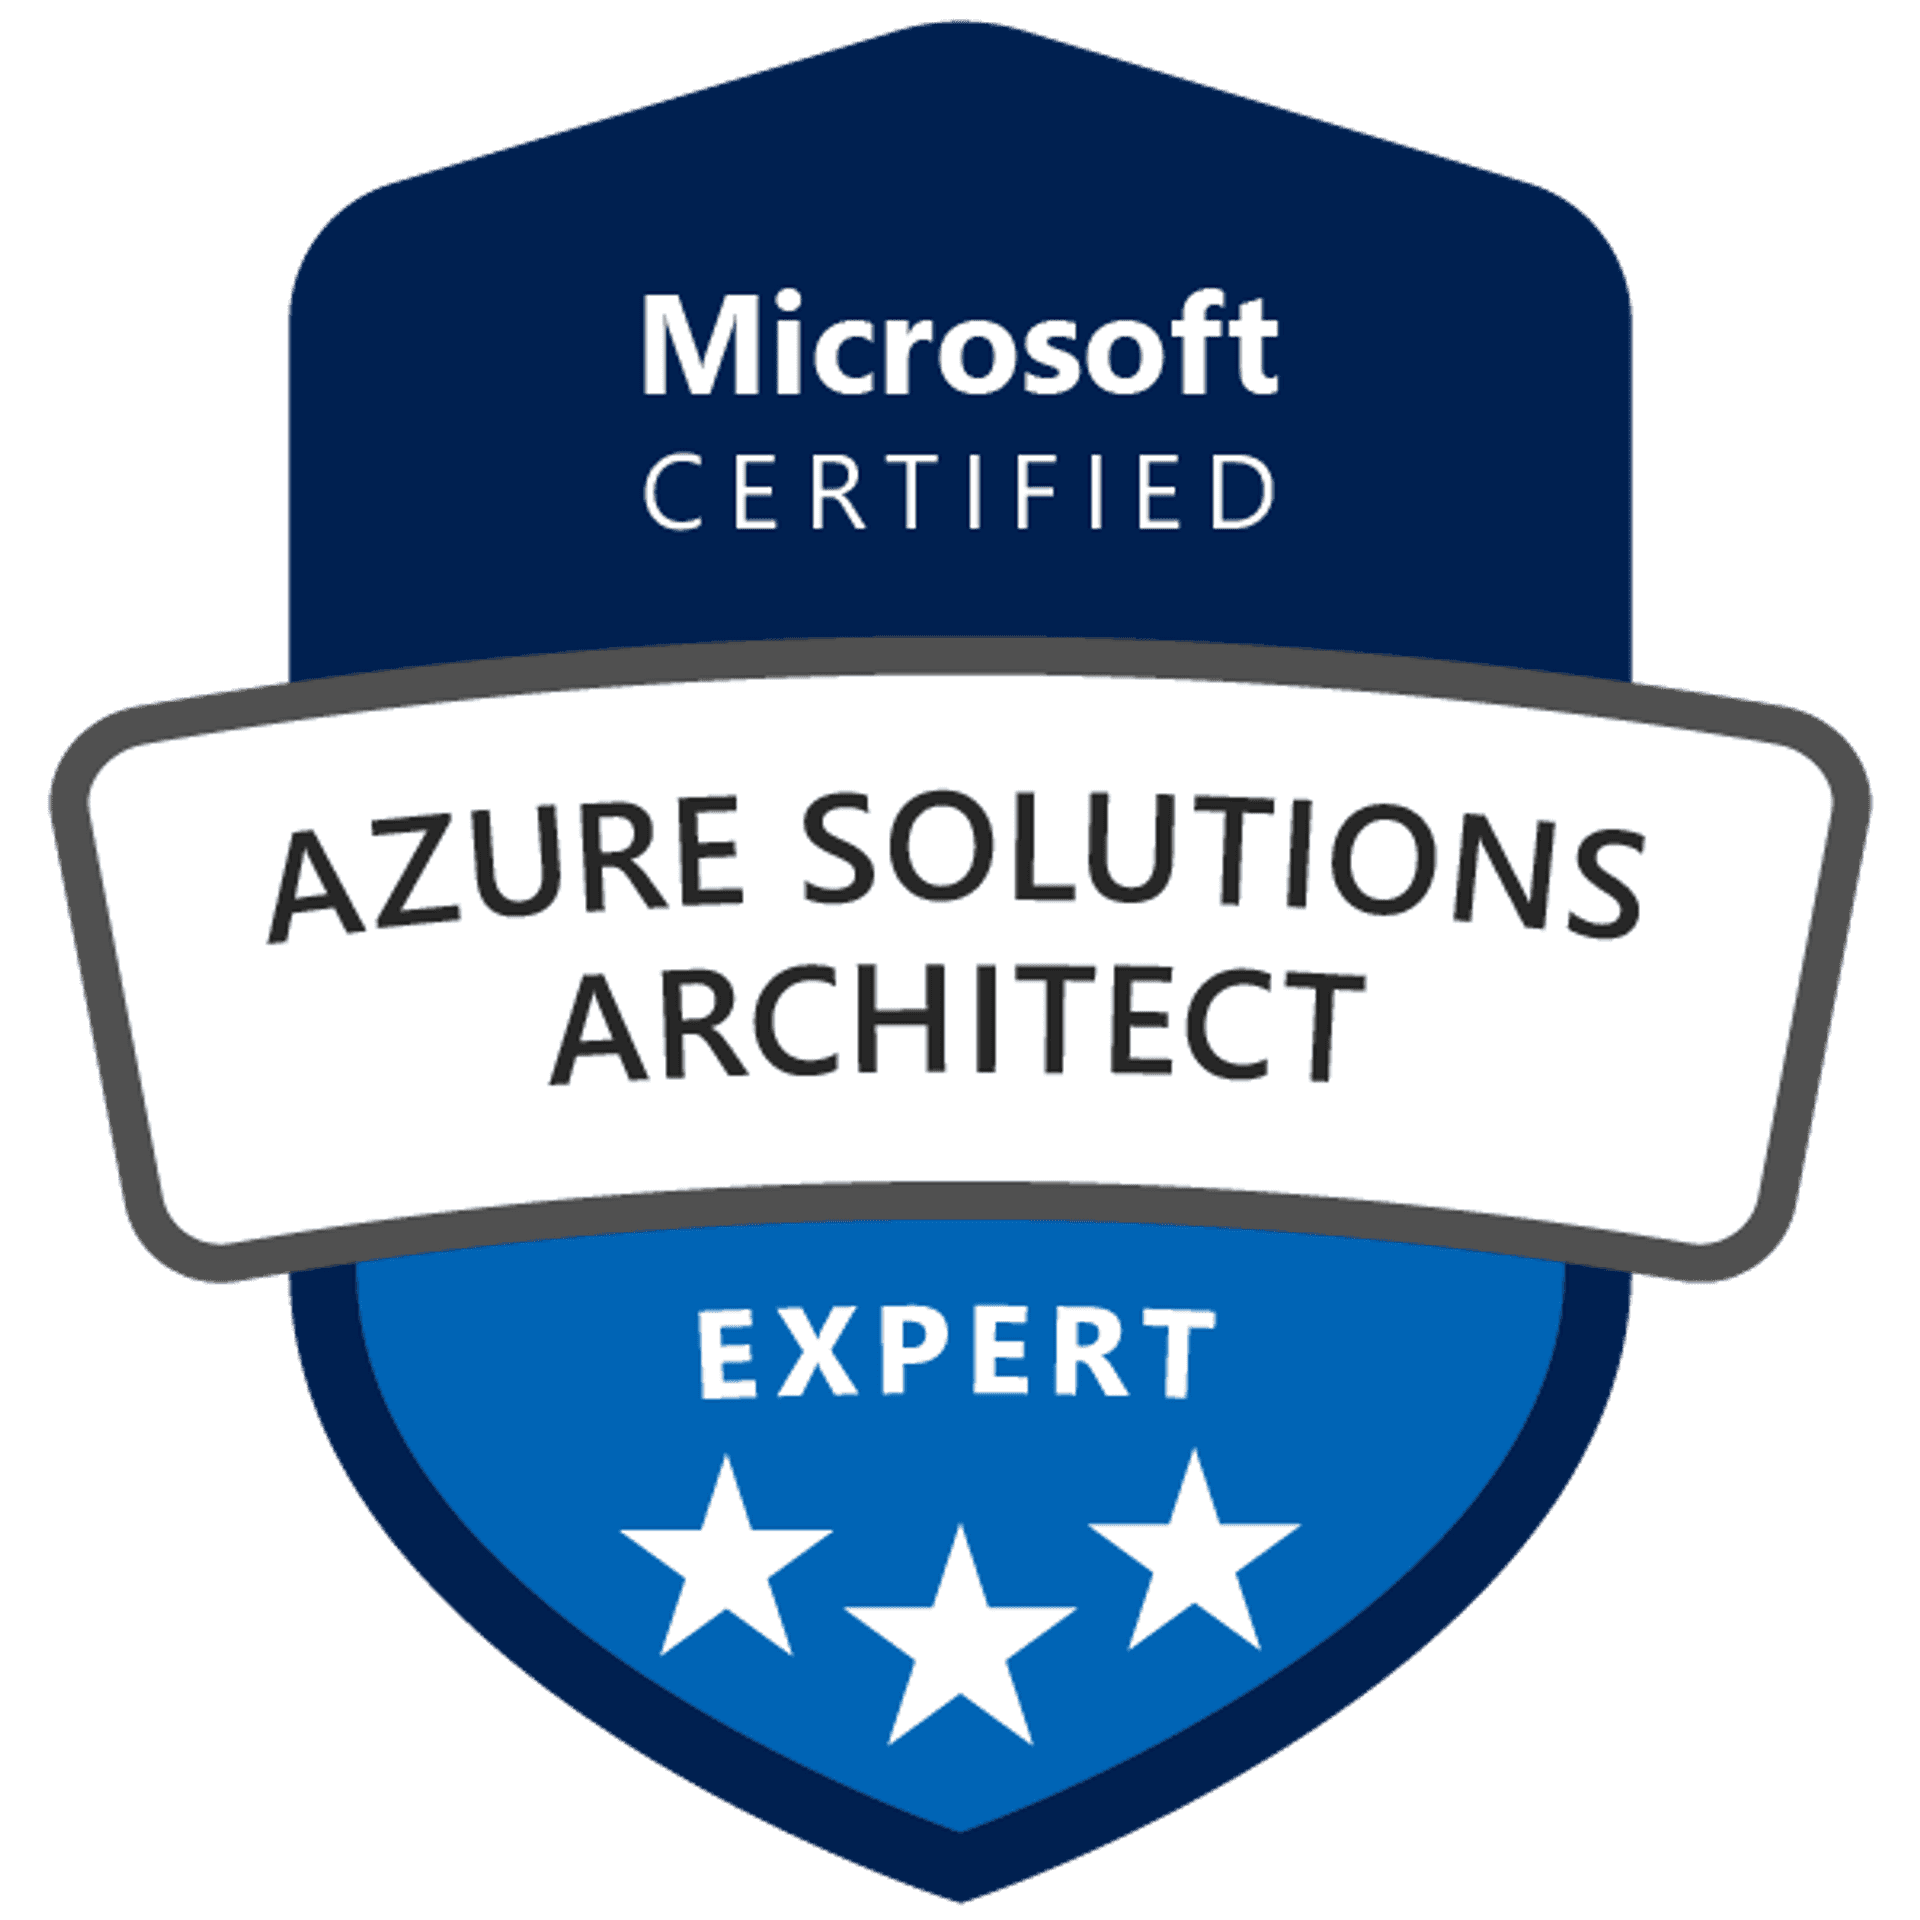 Azure Solutions Architect Expert 600x600